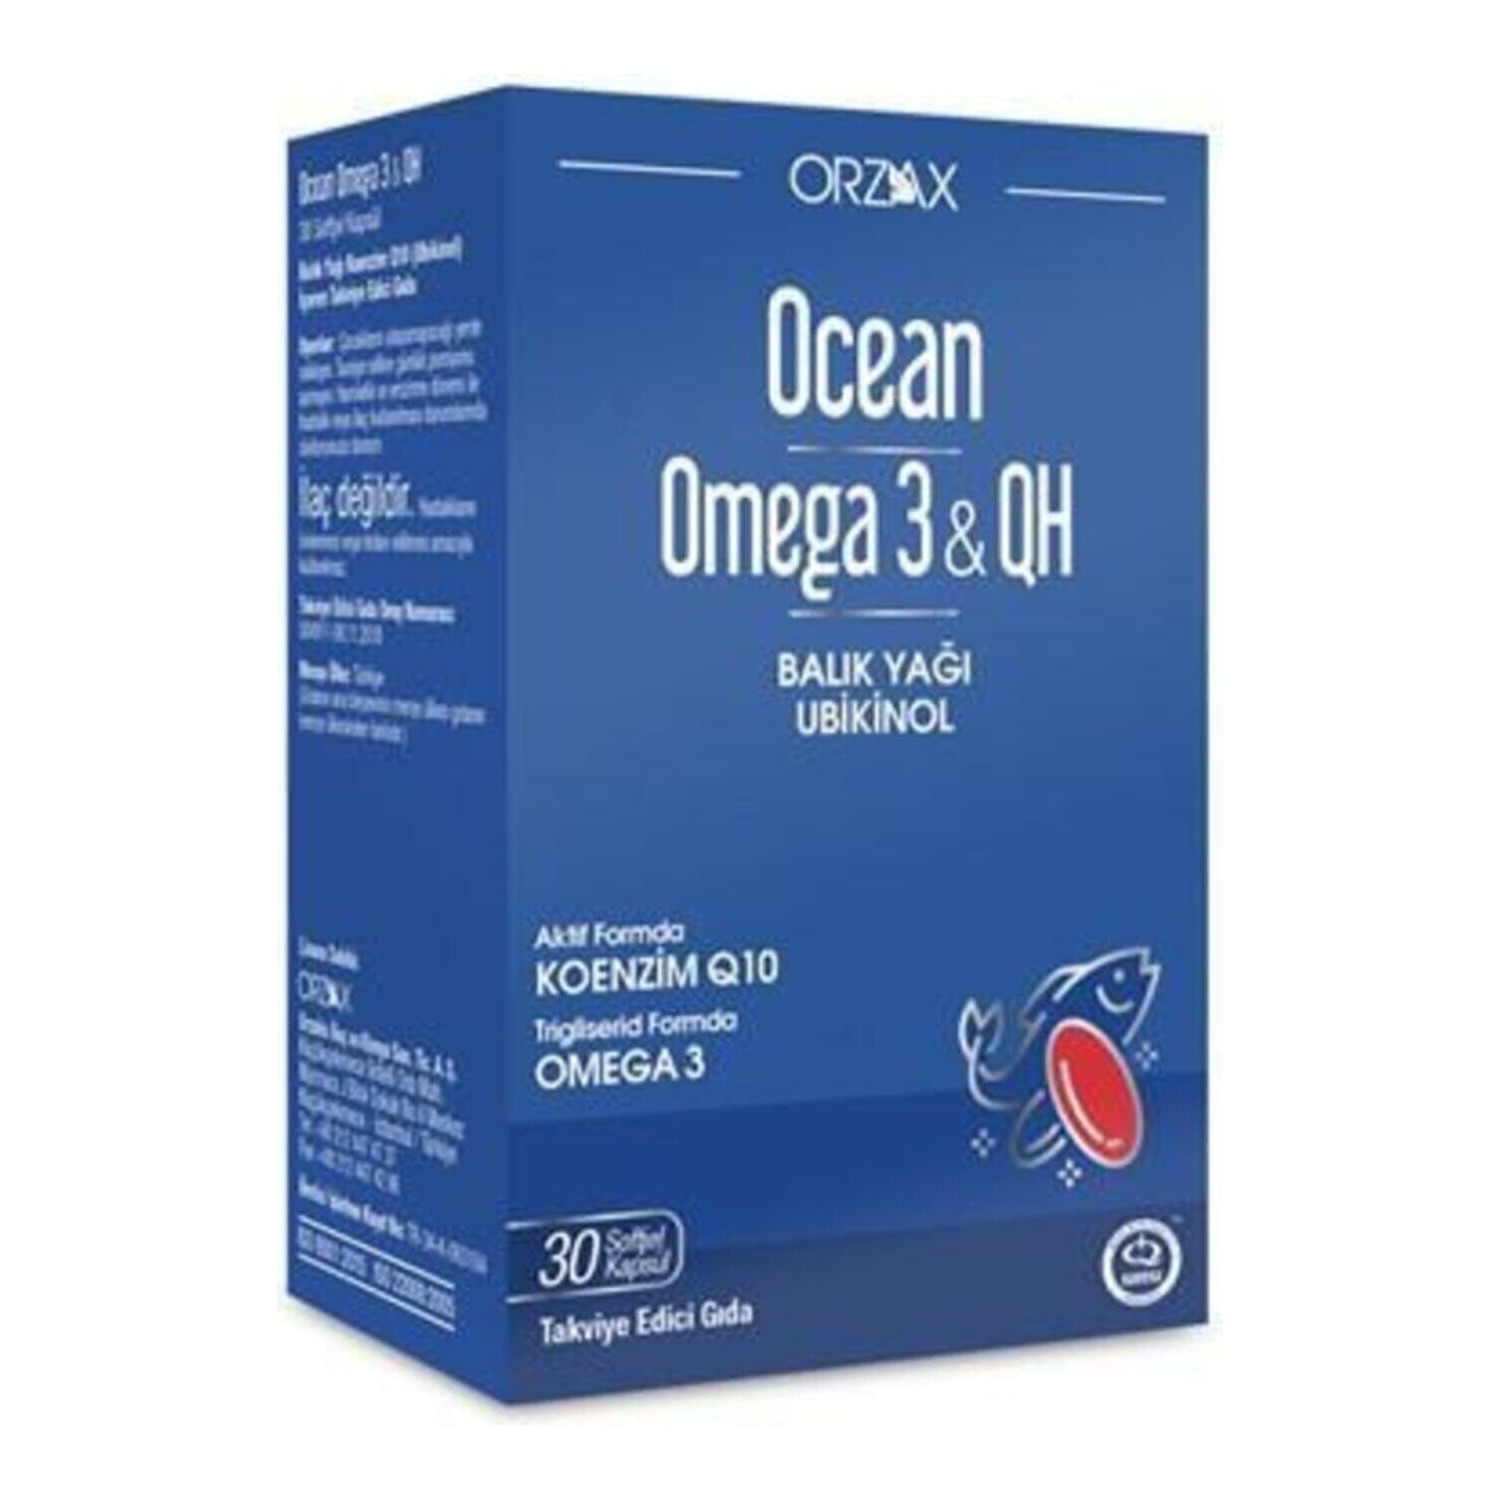 пищевая добавка orzax ocean picozinc supplementary food 3 упаковки по 30 капсул Пищевая добавка Ocean Omega 3 & Qh, 30 мягких капсул